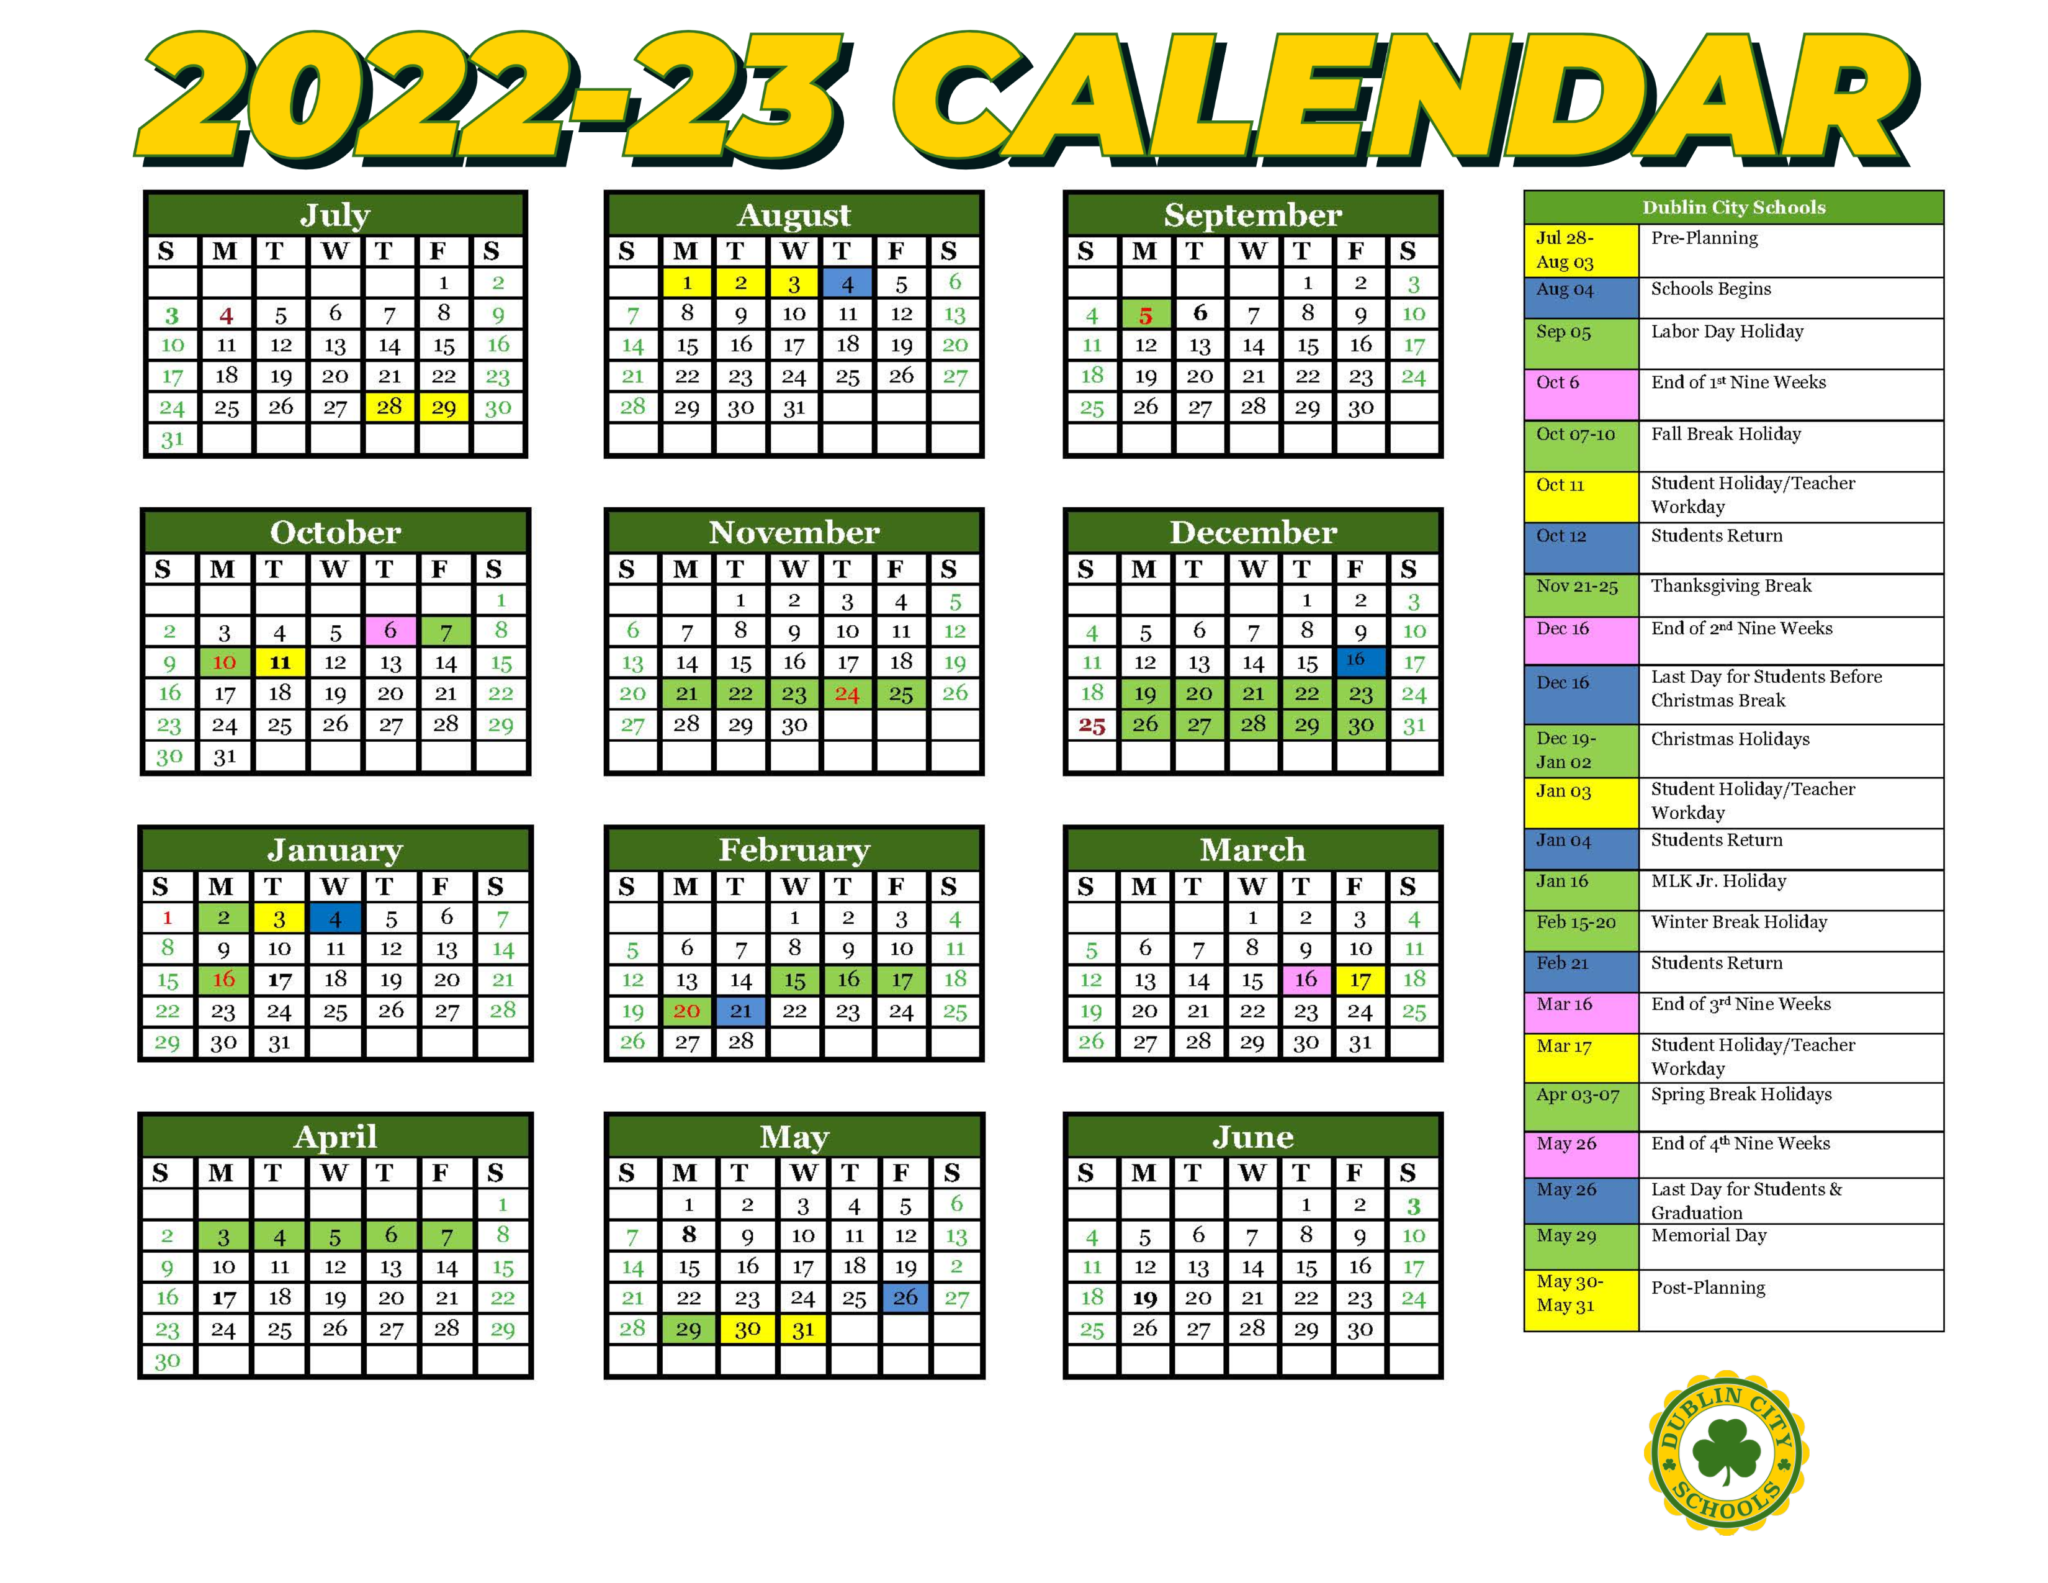 Dublin City Schools Calendar Holidays 2022-2023 in PDF